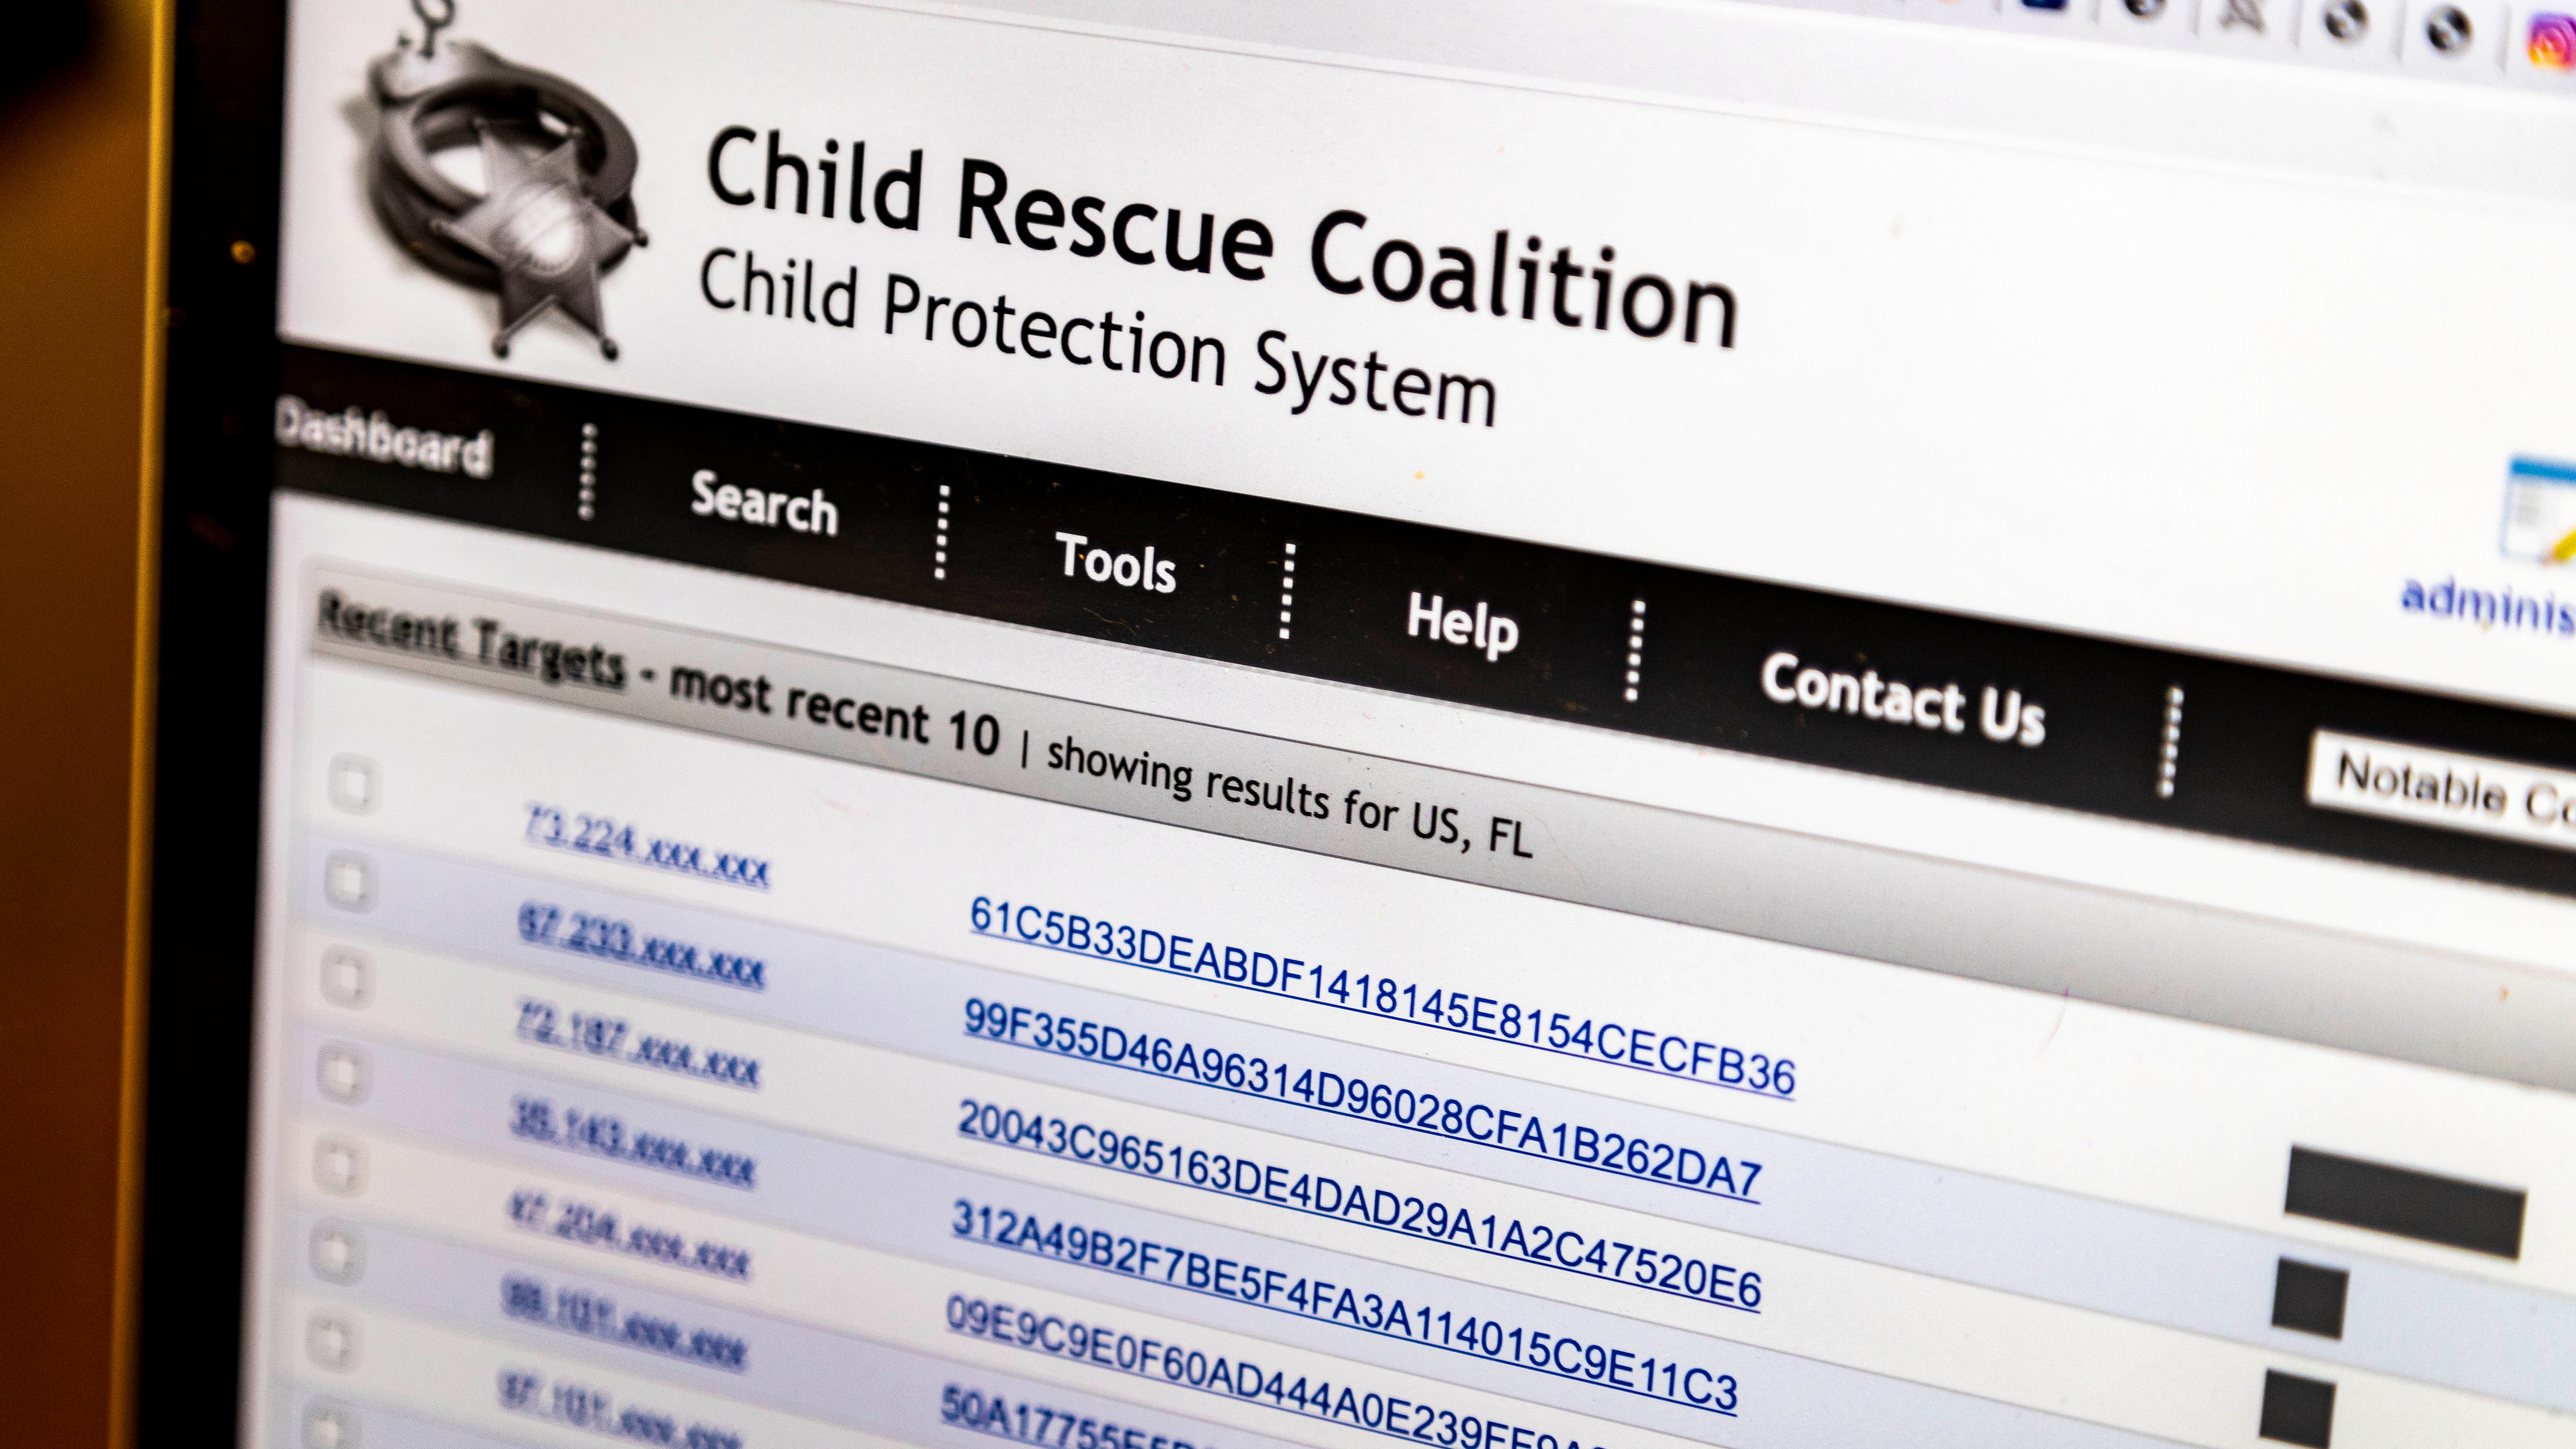 Xxx Rep Vidios - Online child sex abuse at a crisis level: Can Biden help solve it?